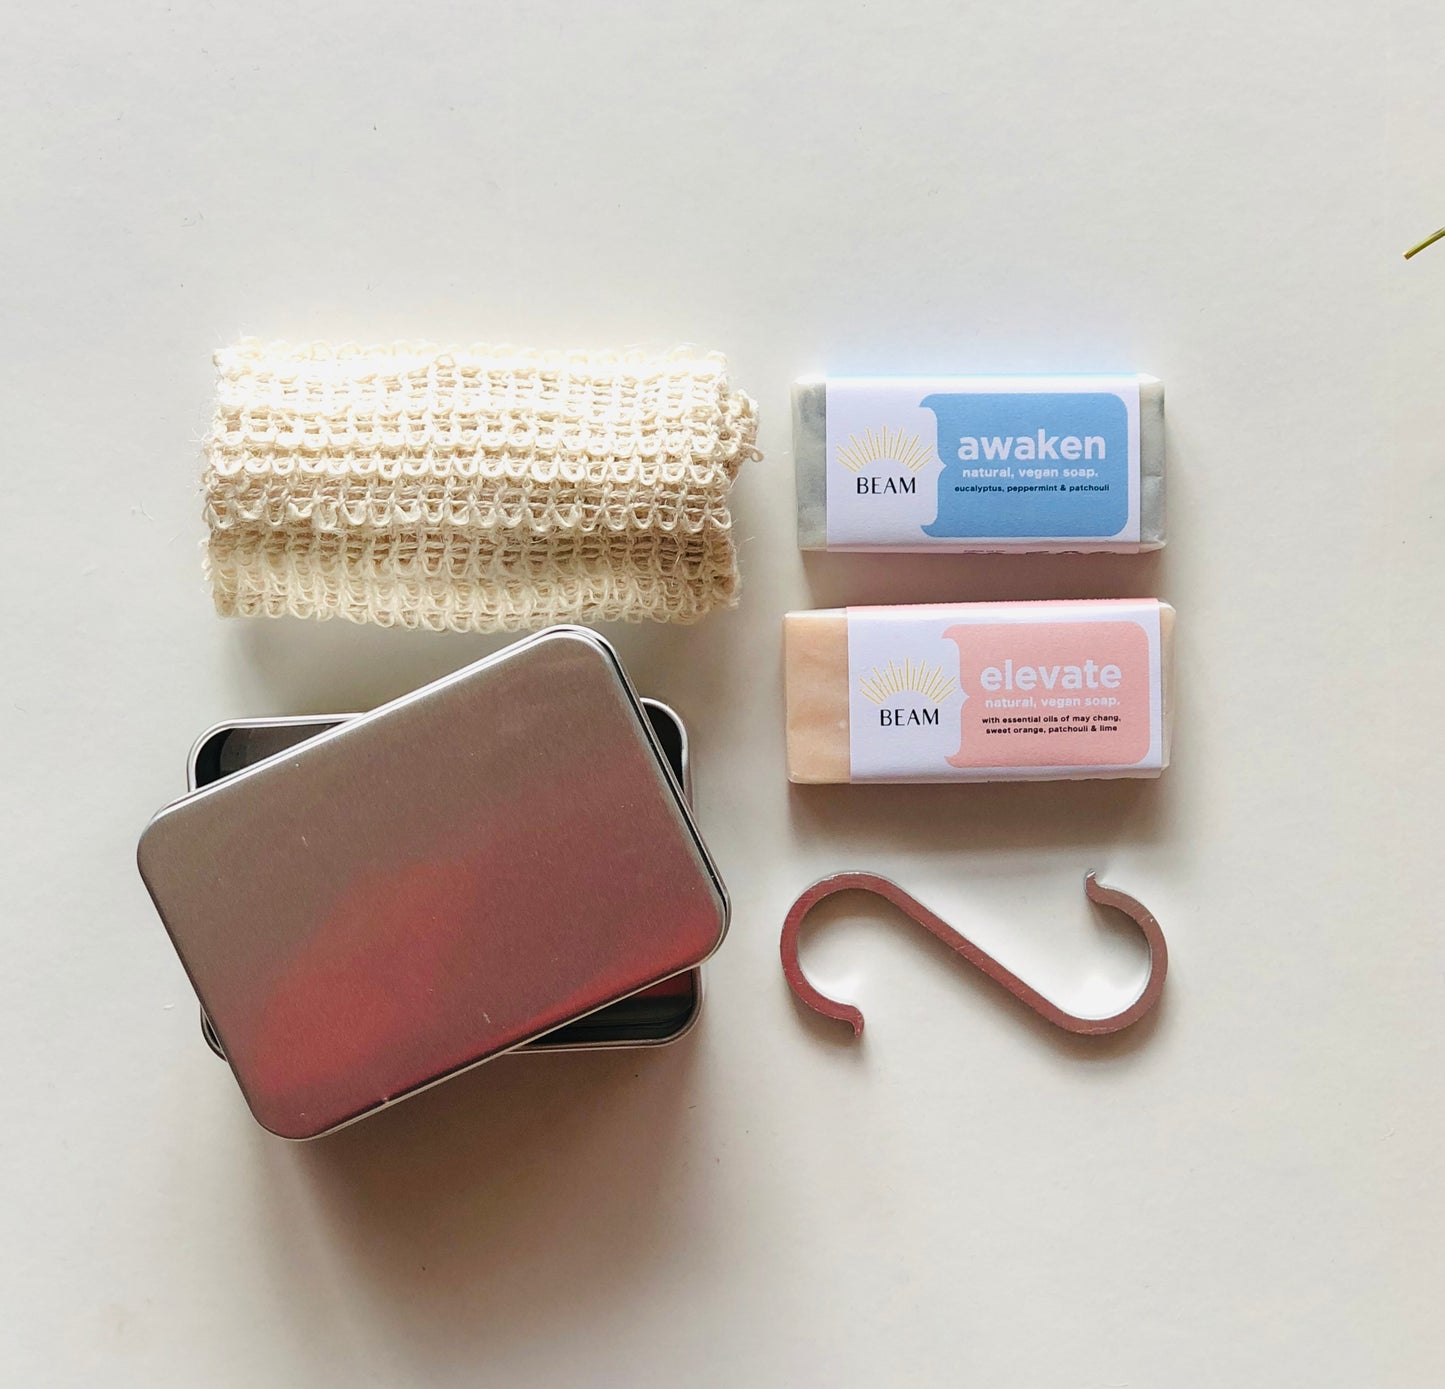 Travel Soap Kit - Beam - 2 Vegan Soap - Soap Bag - Hook